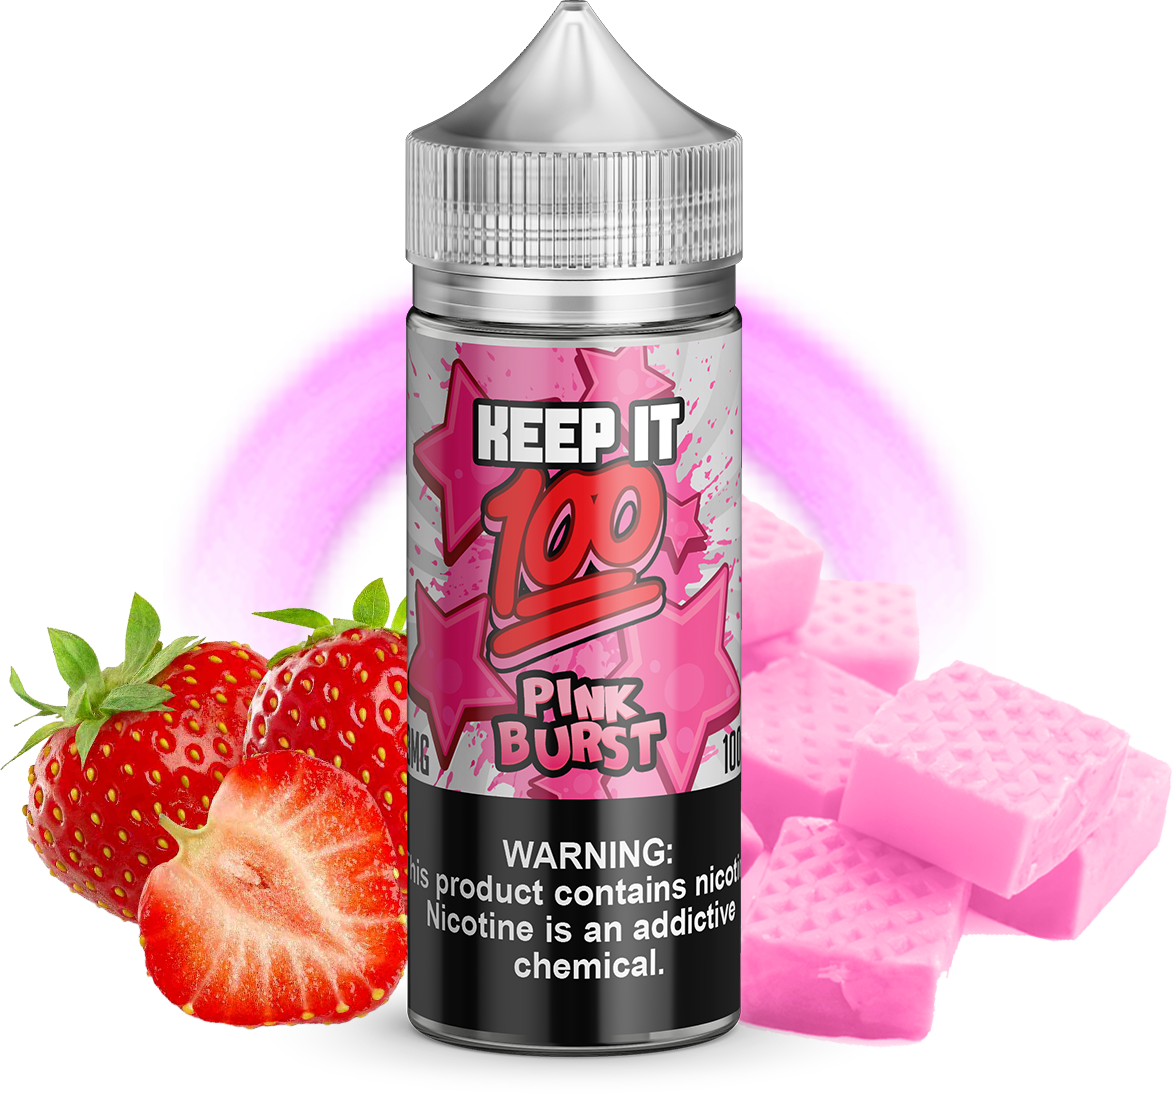 Keep It 100 - Pink Burst - 100ML Vape Juice - Plastic Bottle Strawberry Starburst Candy